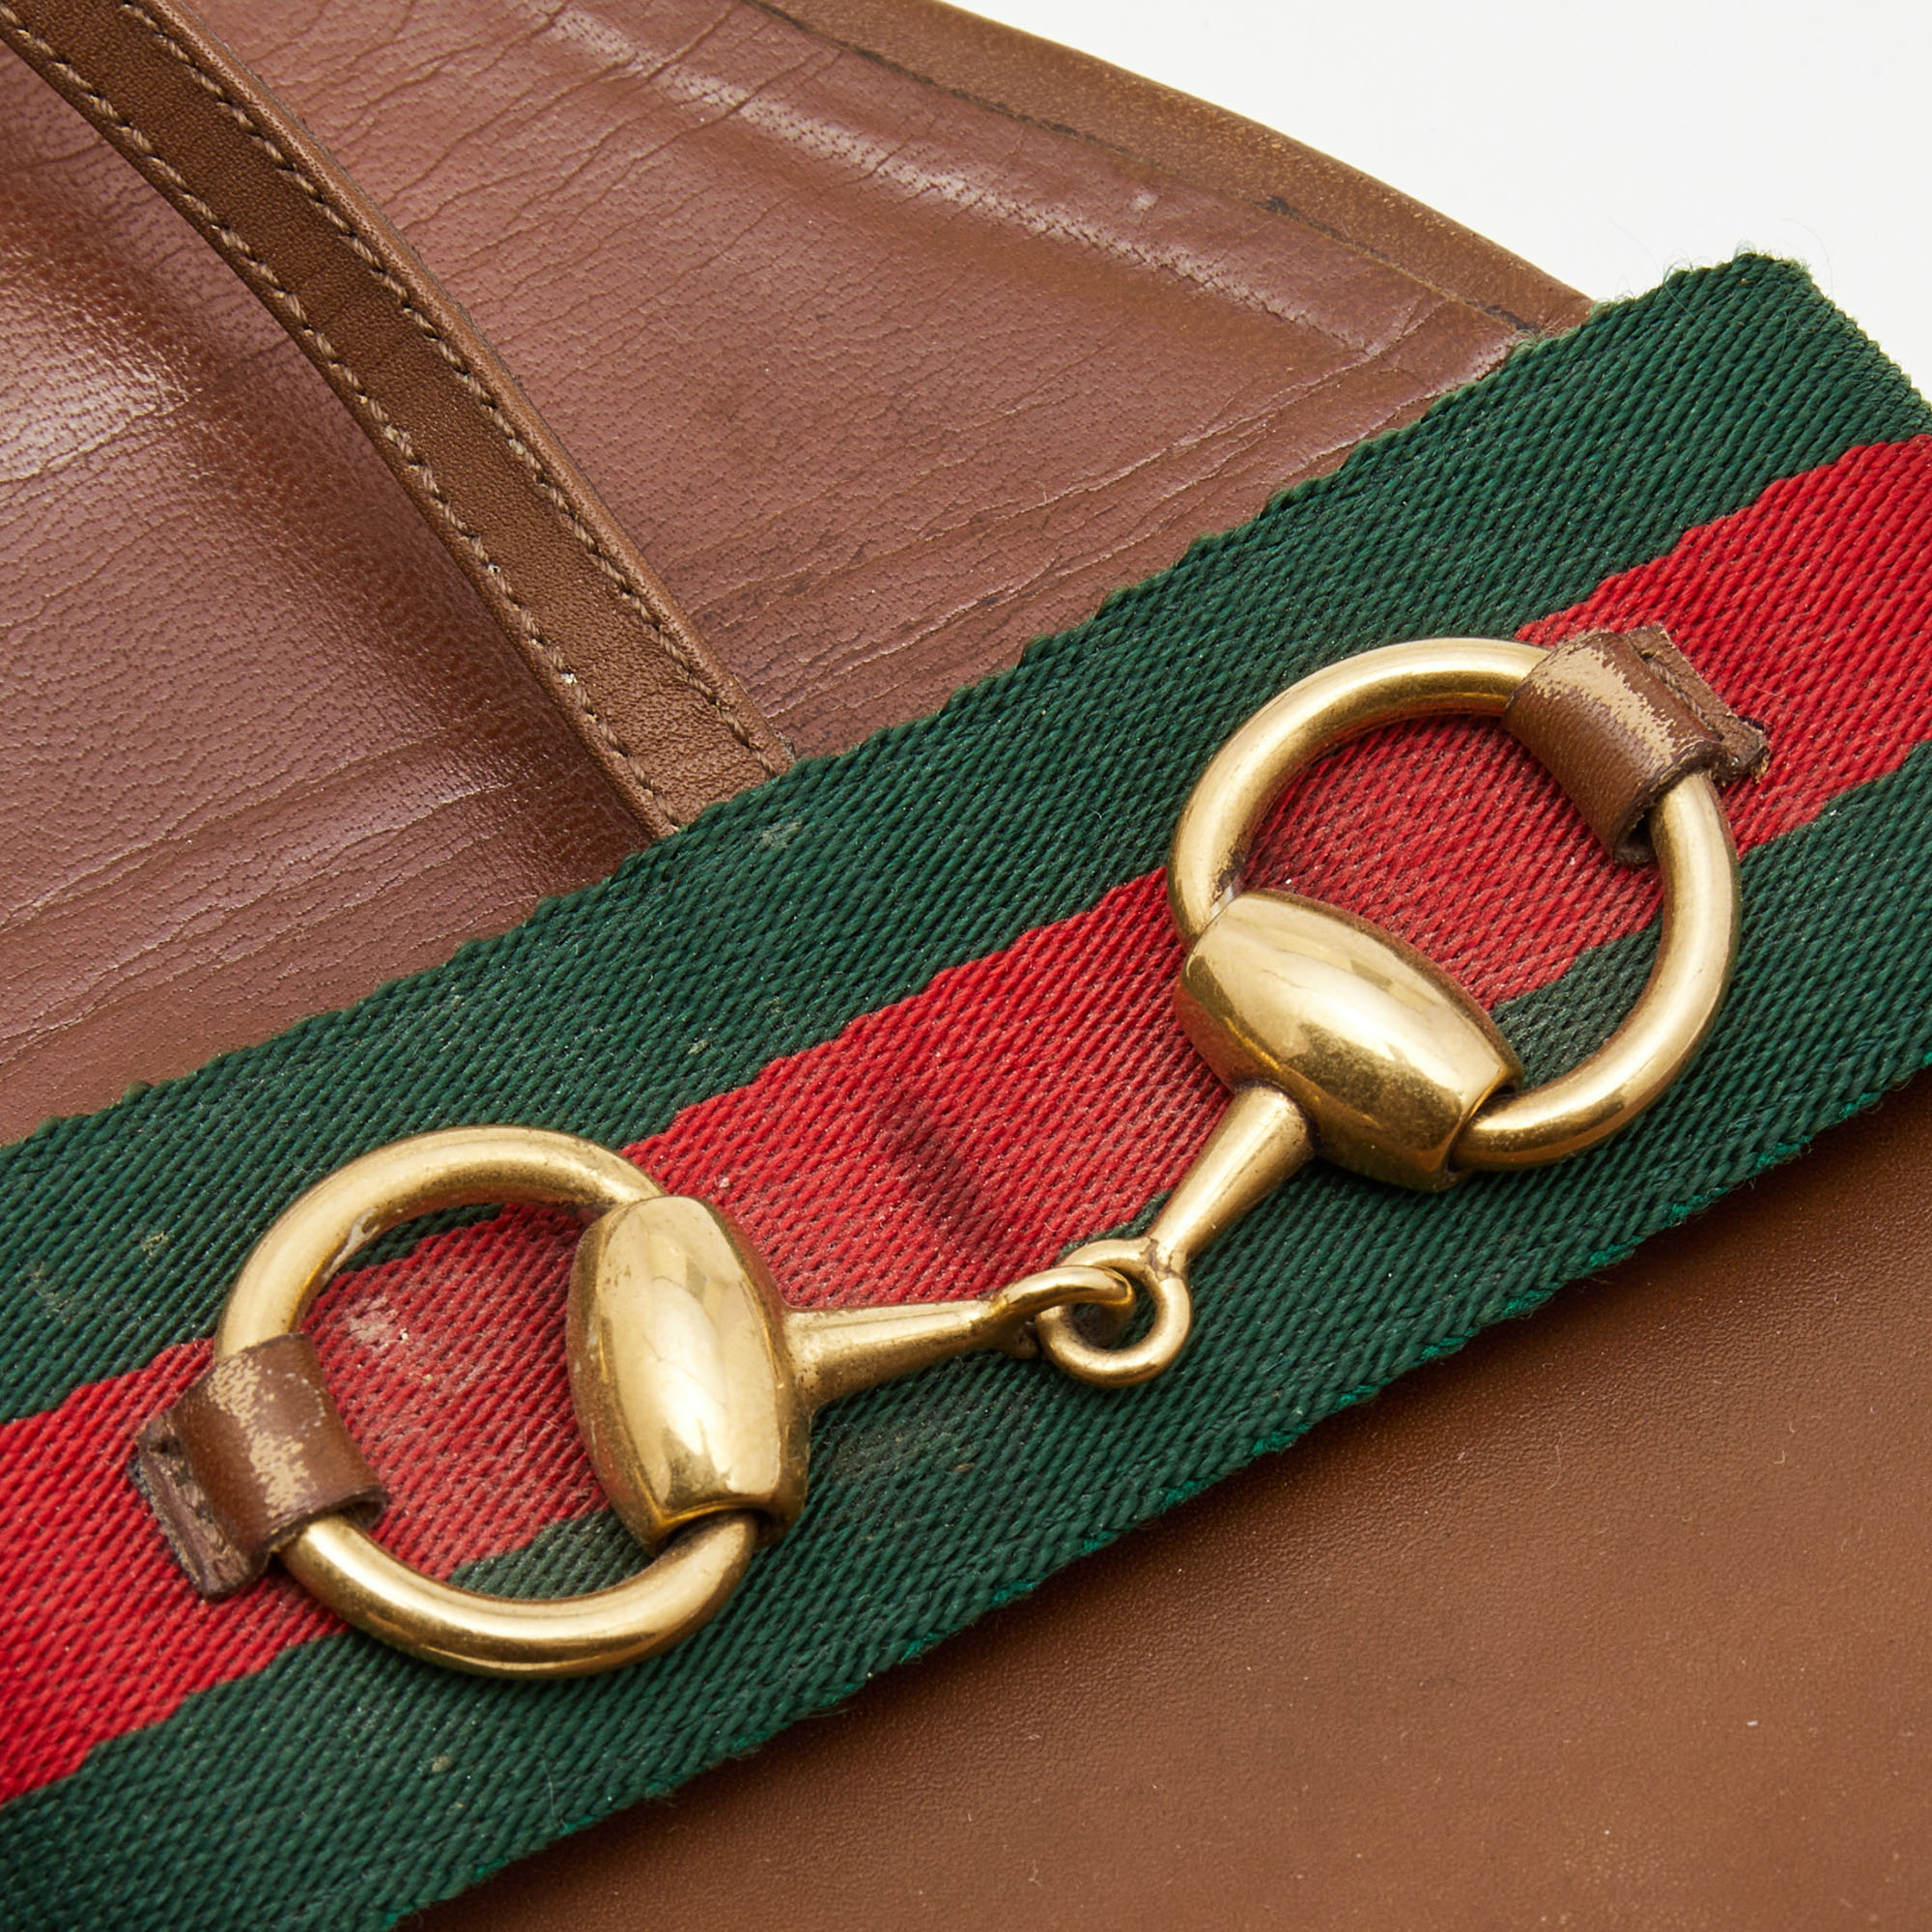 Gucci Brown Leather Web Detail Liliana Horsebit Flat Sandals Size 40